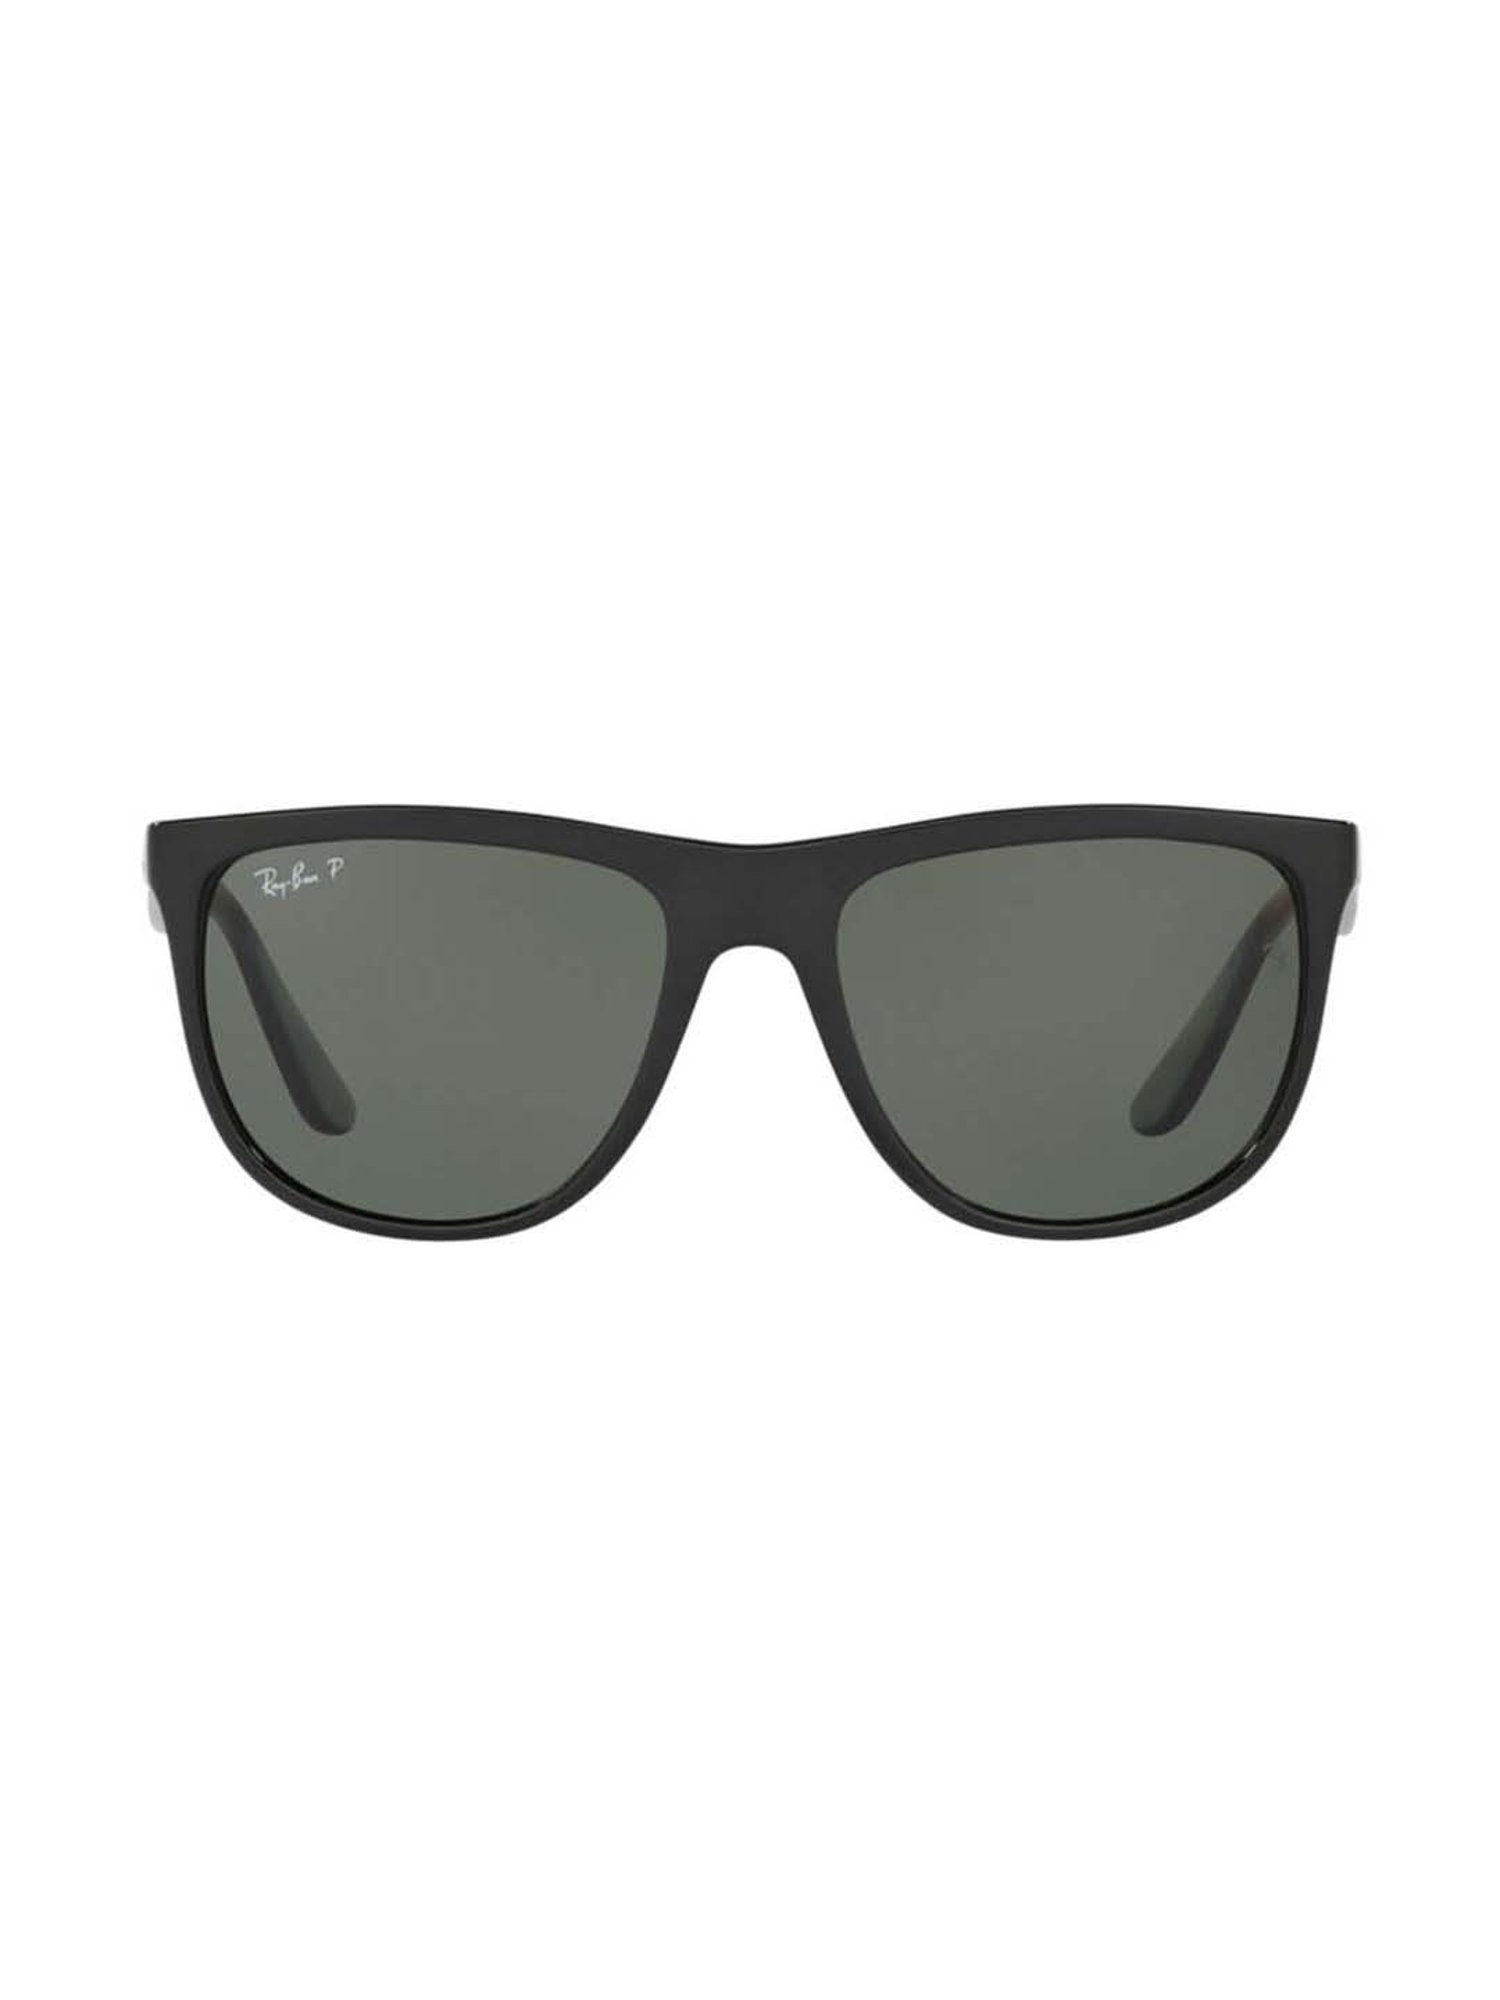 Ray-Ban Polarized Blue/Grey Square Unisex Sunglasses RB3683 004/78 59  8056597846592 - Sunglasses, Square - Jomashop